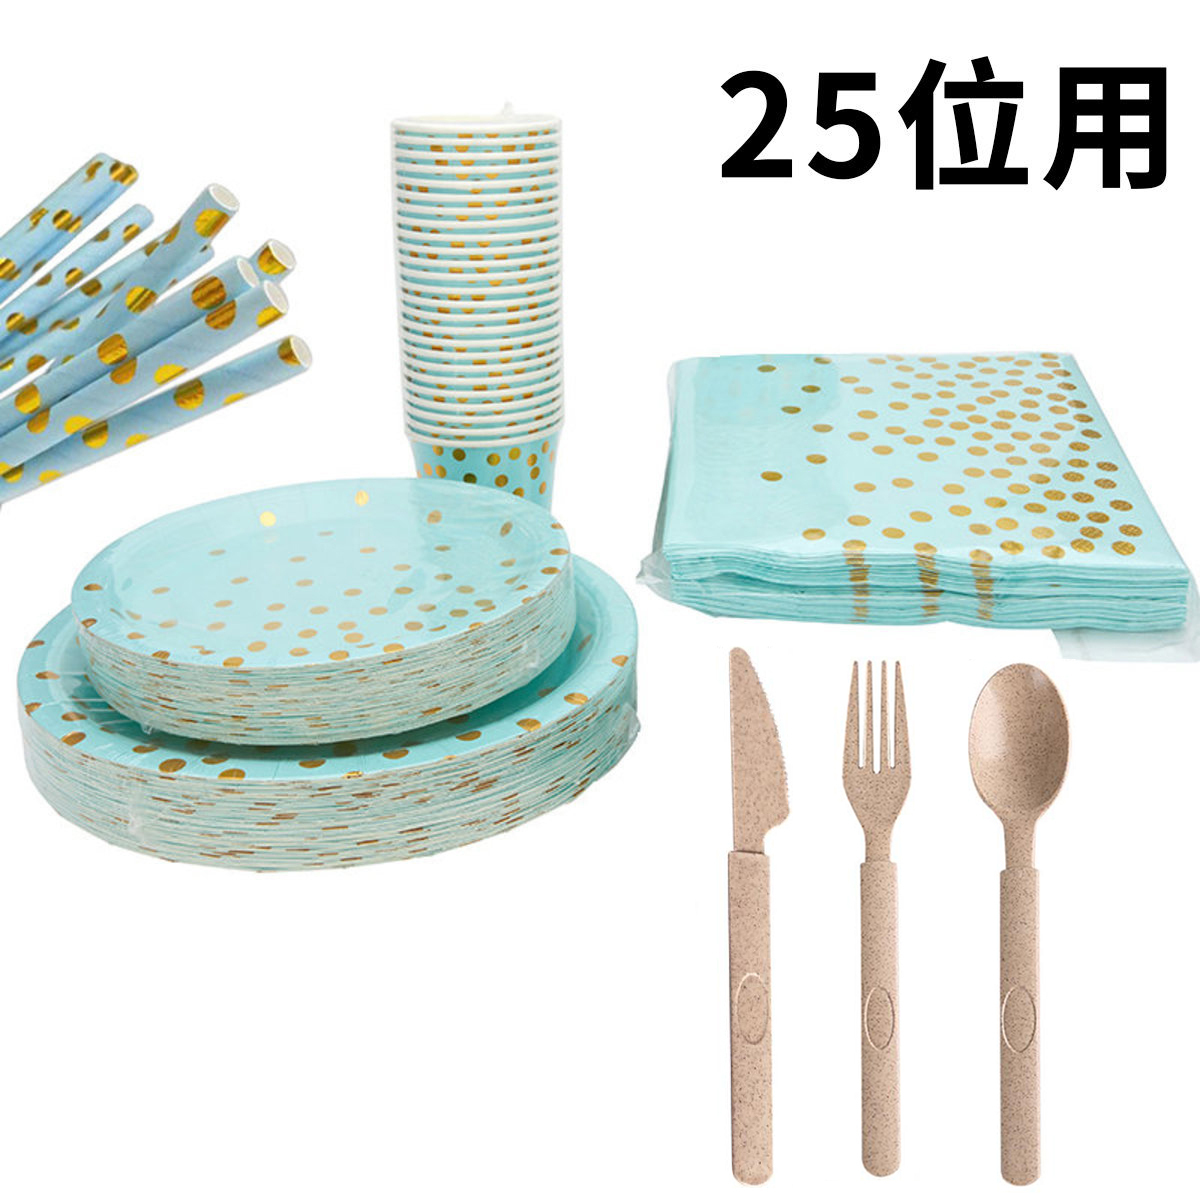 Festive/Party/Tableware Set - Blue Gold Spots Party Banquet Disposable Tableware set (n)(25 people}